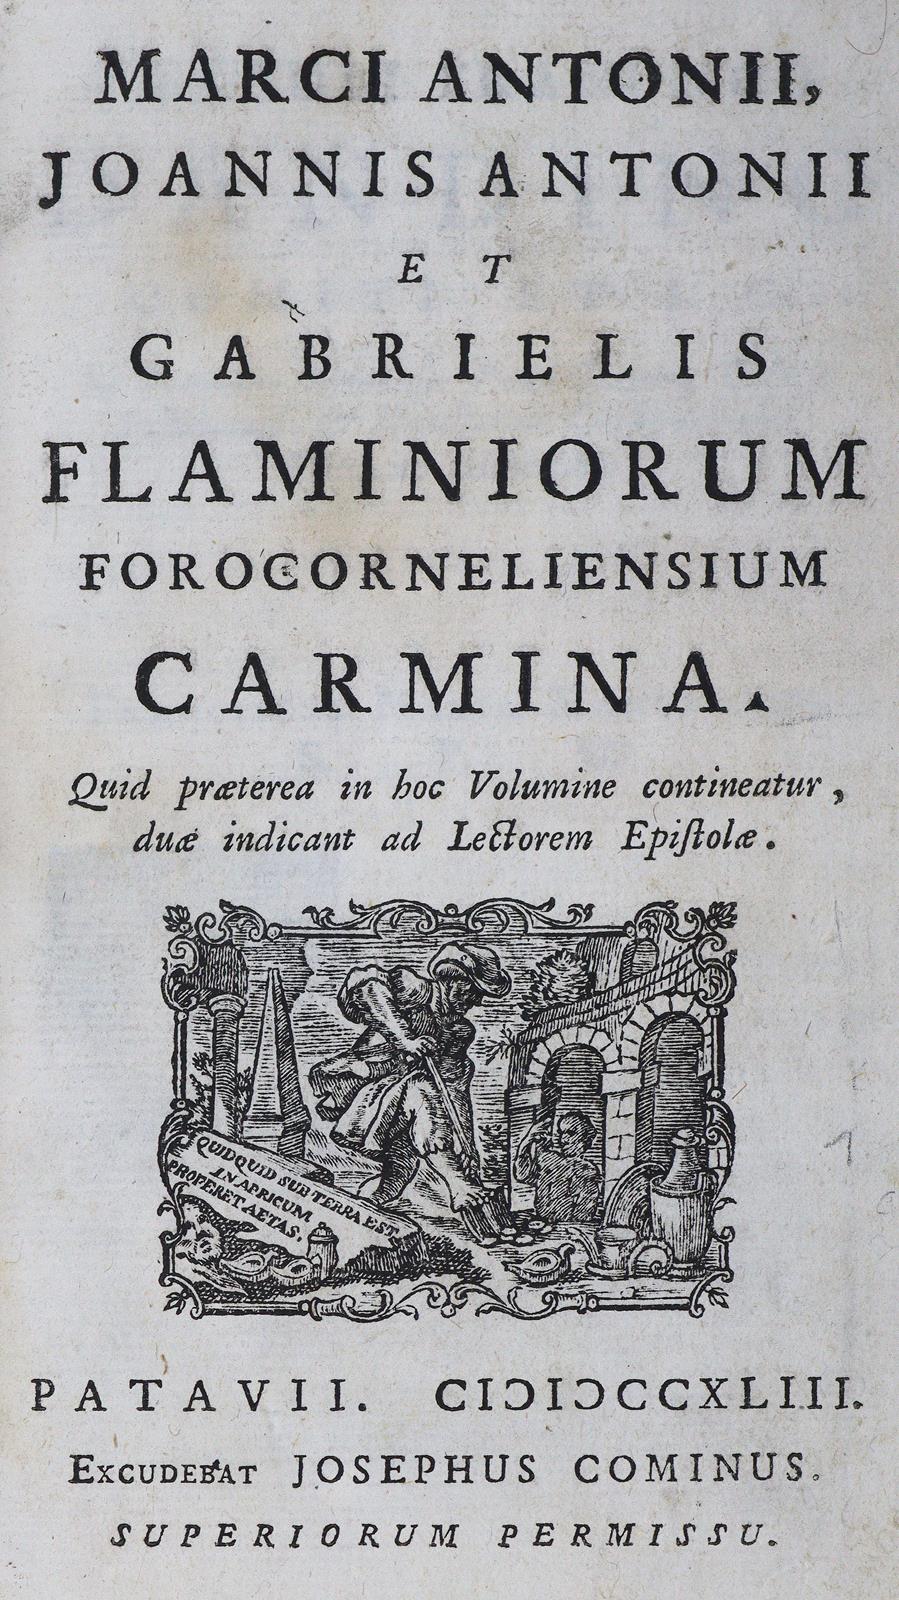 Flaminio,M.A., G.A. u. G. | Bild Nr.1